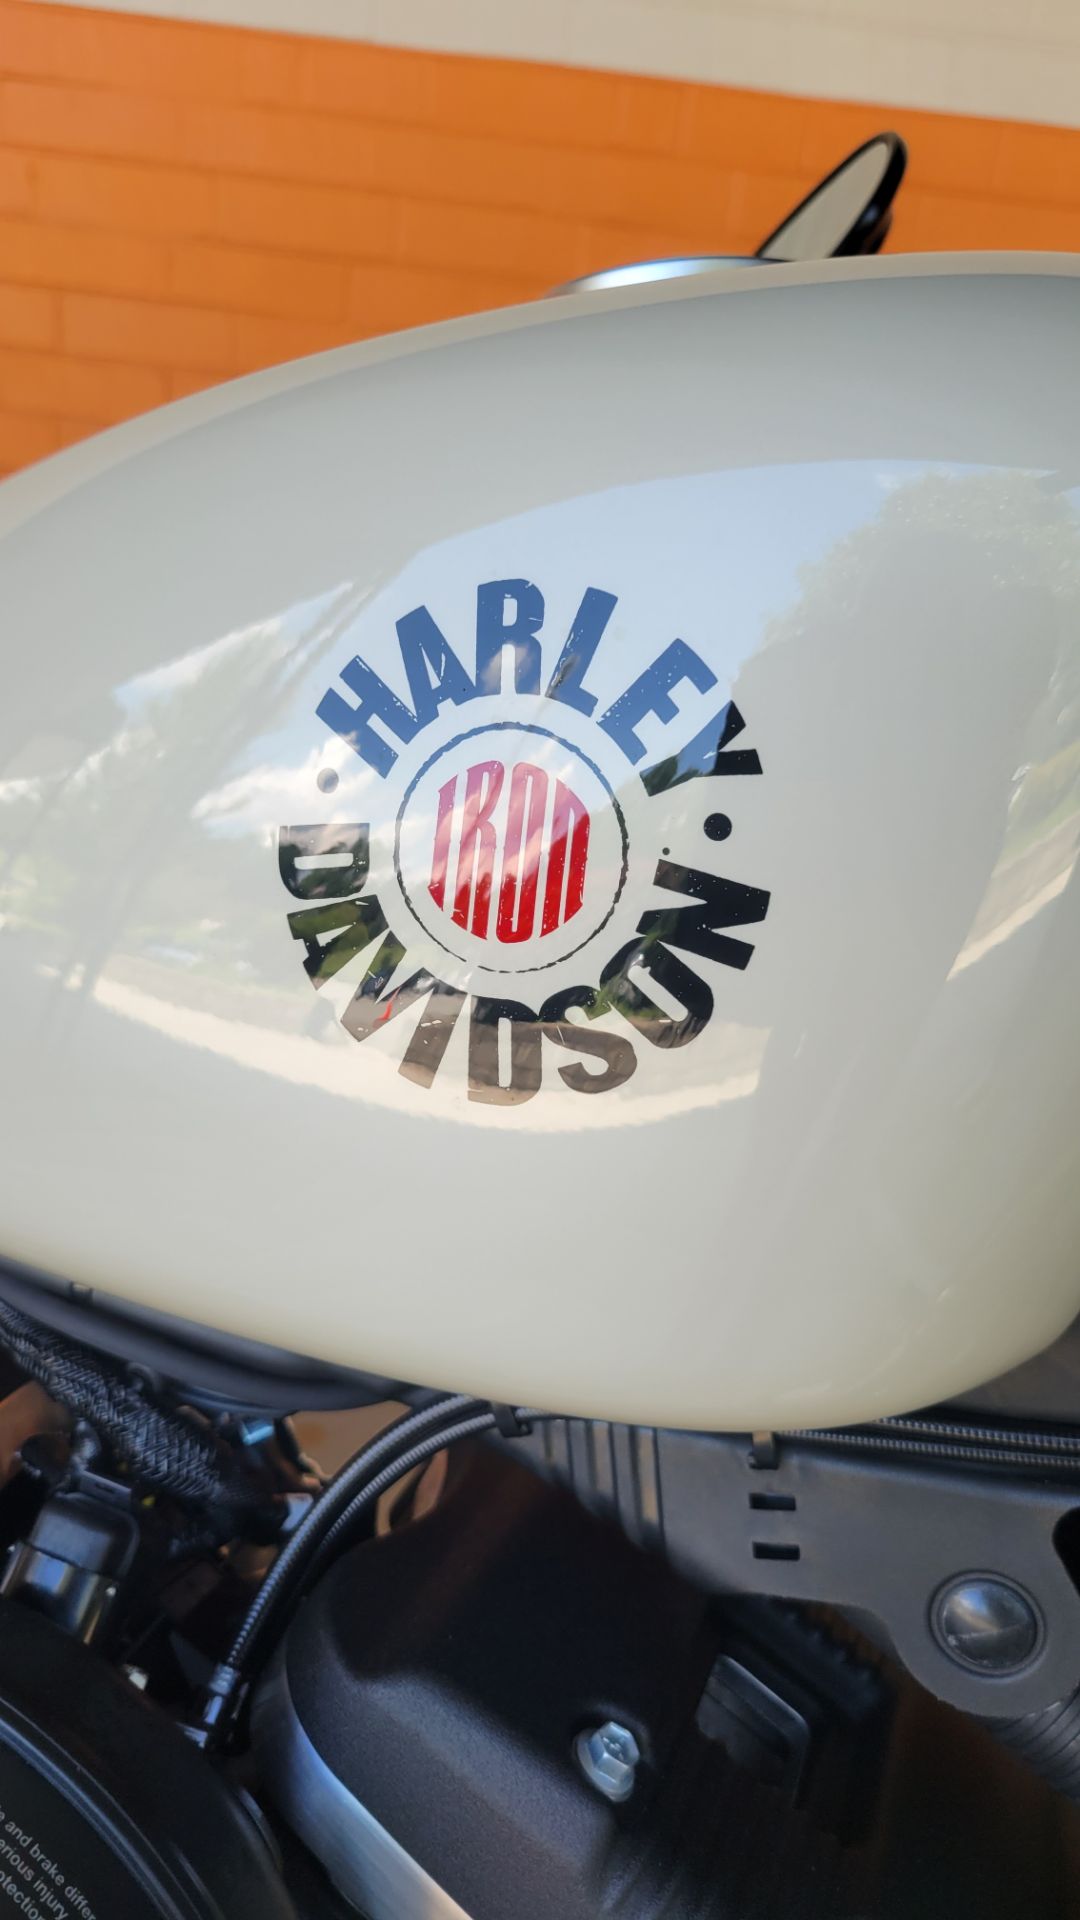 2022 Harley-Davidson Iron 883™ in Winston Salem, North Carolina - Photo 7